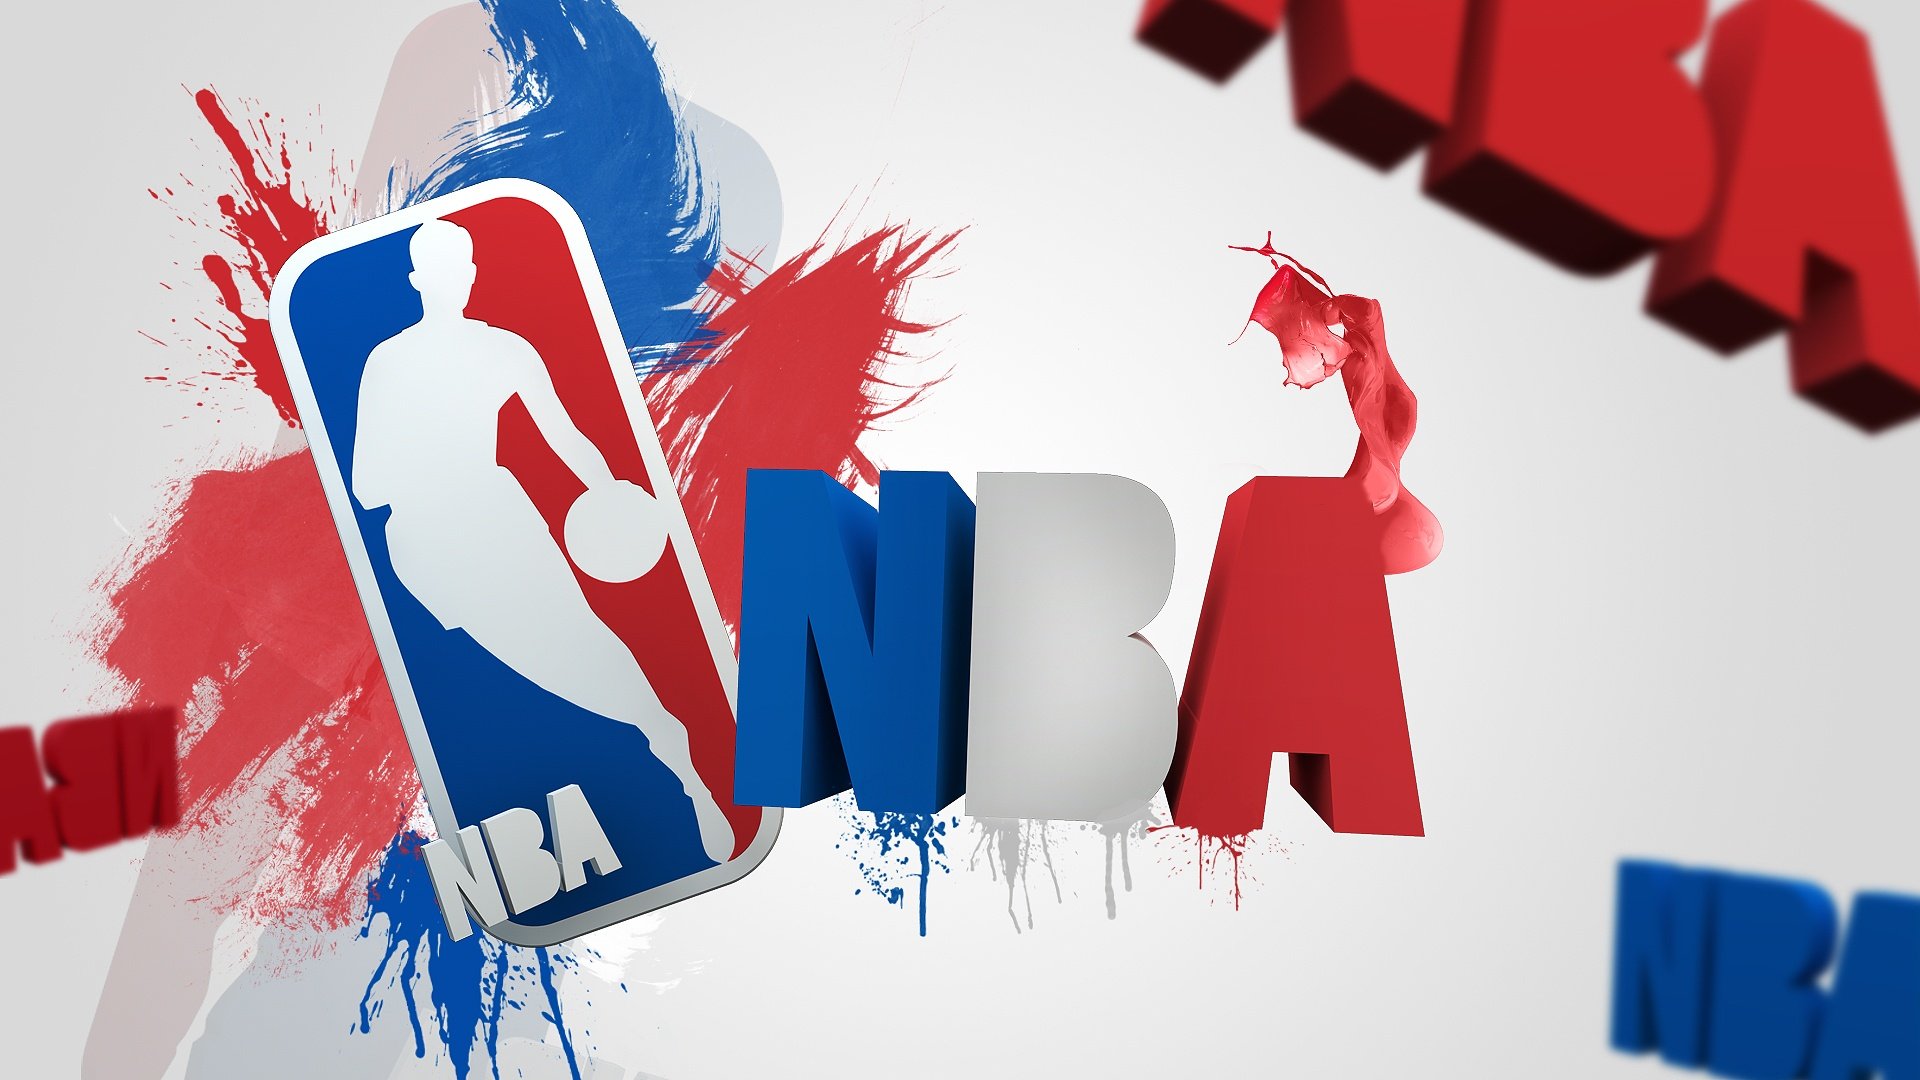 NBA Wallpapers NBA Backgrounds NBA Free HD Wallpapers